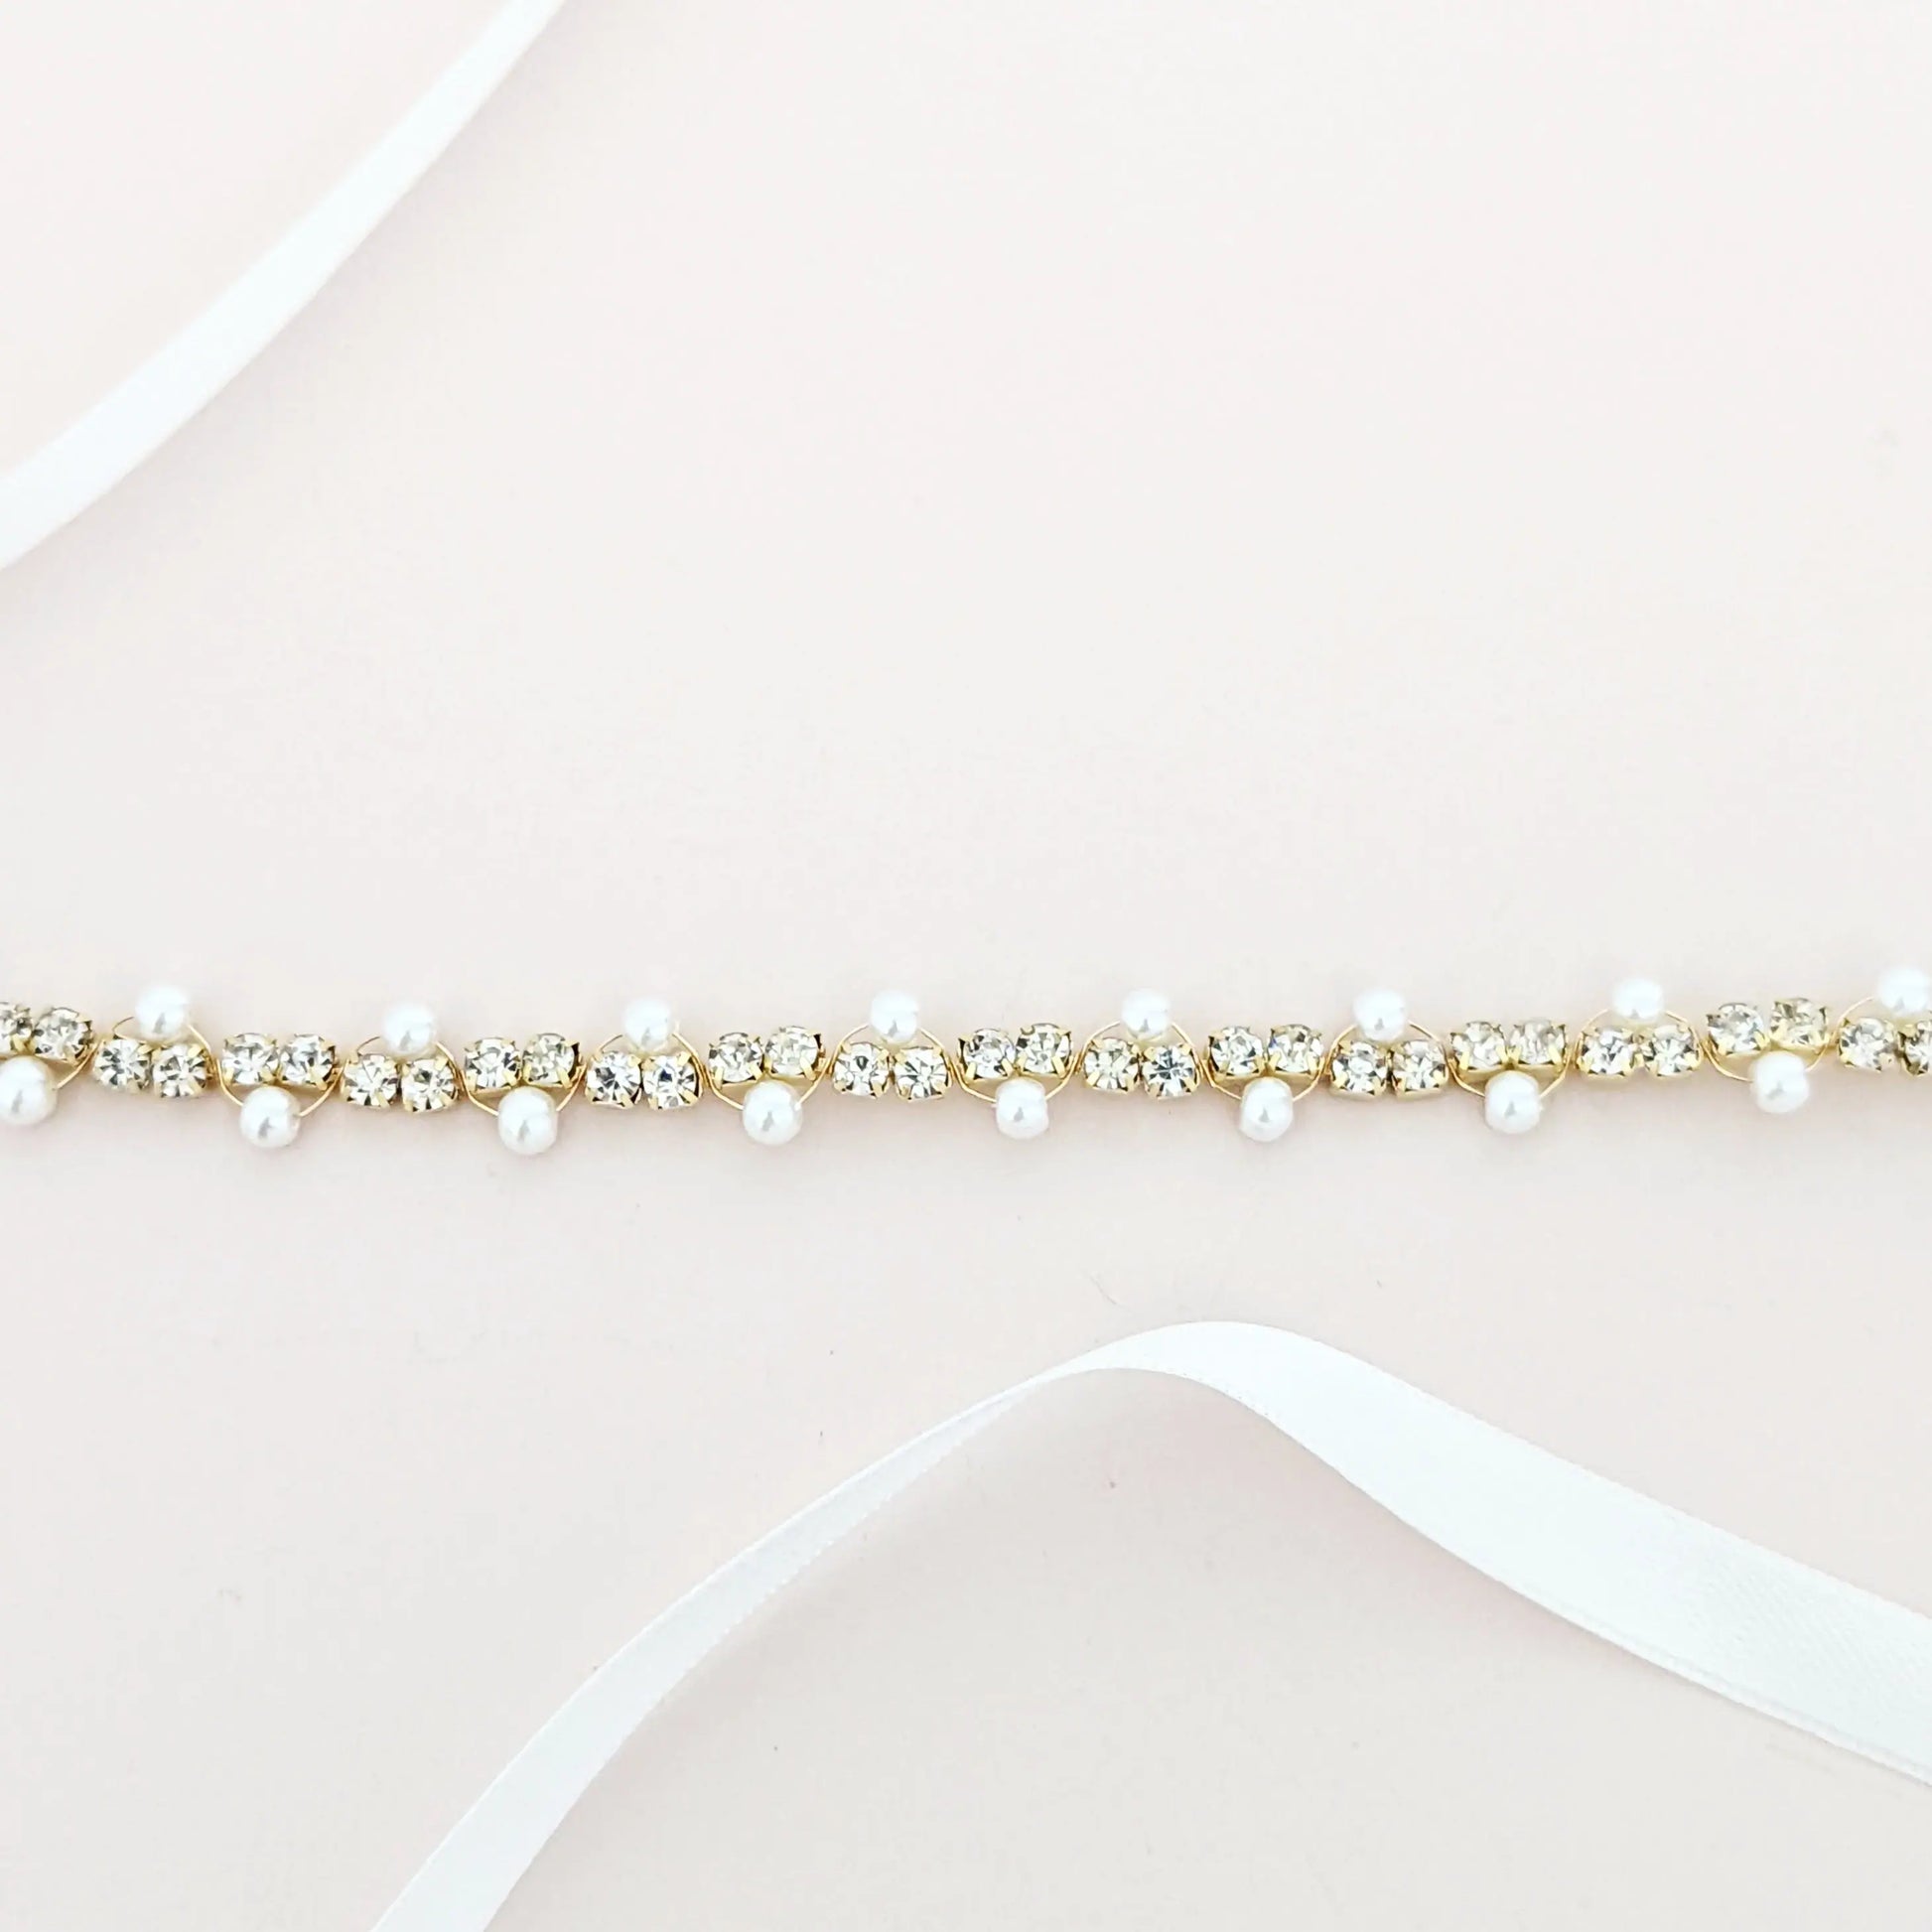 Pearl Sash Wedding Belt, Ivory Bridal Belt With Pearls and Crystals, 1  Width Full Waist Handmade Wedding Belt, Wedding Dress Belt 